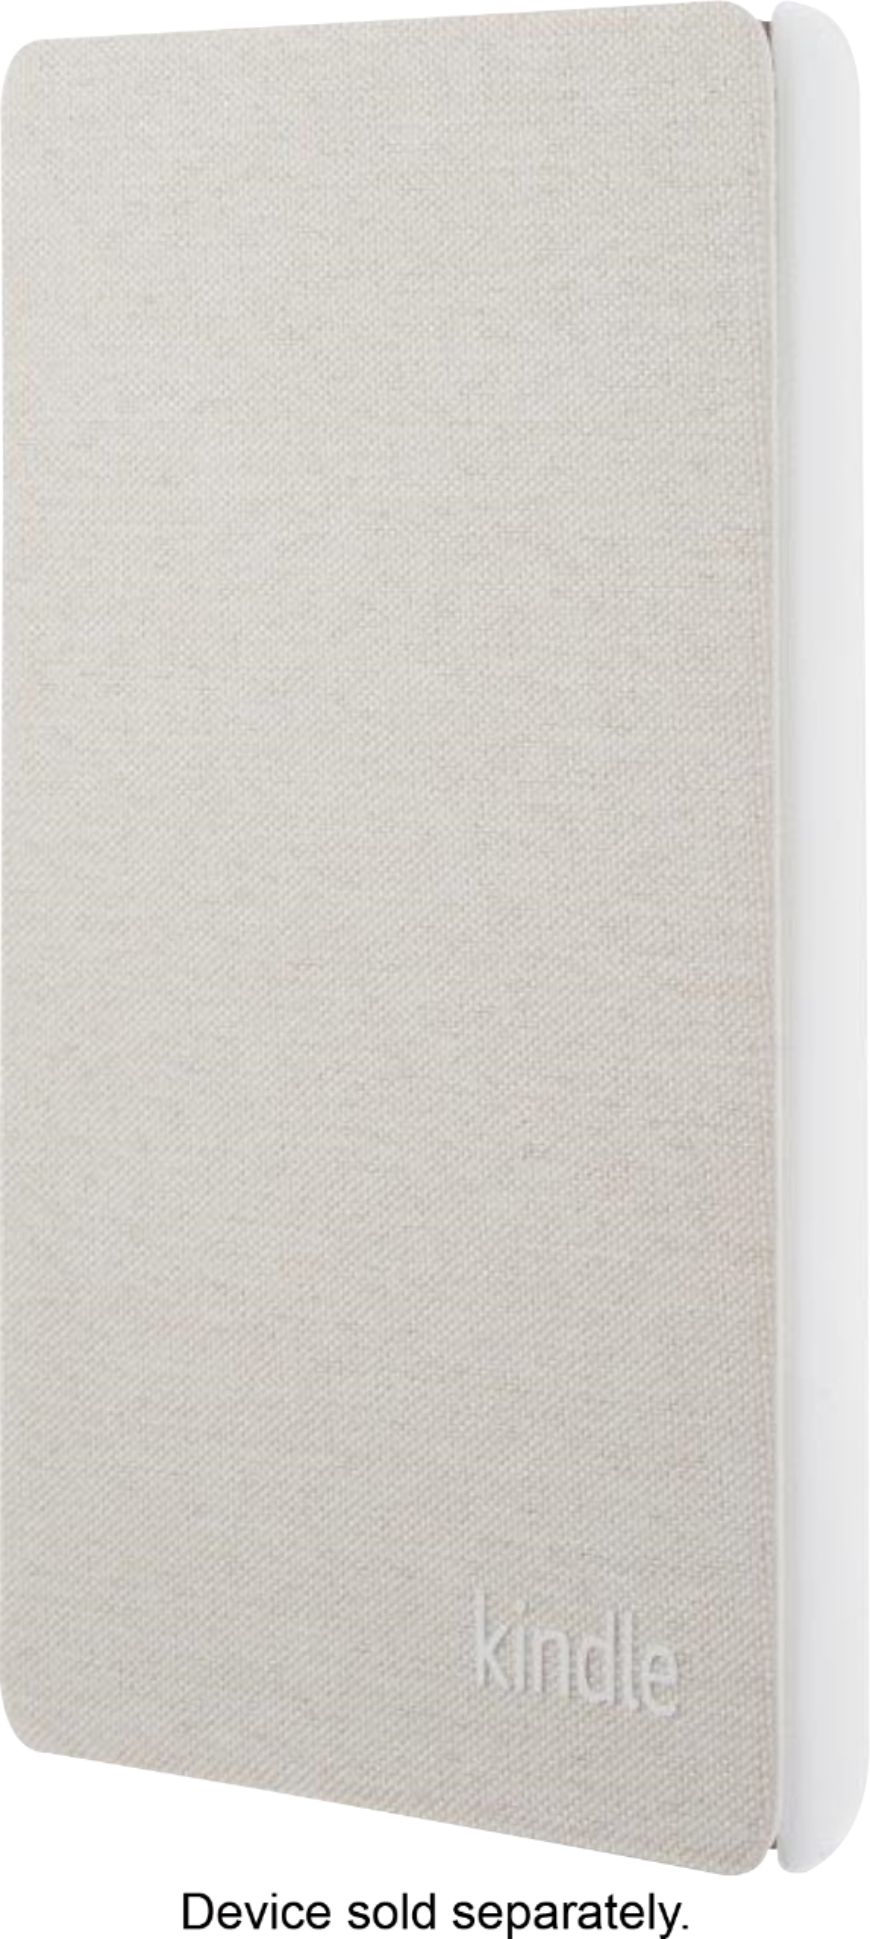 Amazon Kindle Fabric Cover Sandstone White B07K8RT38J - Best Buy